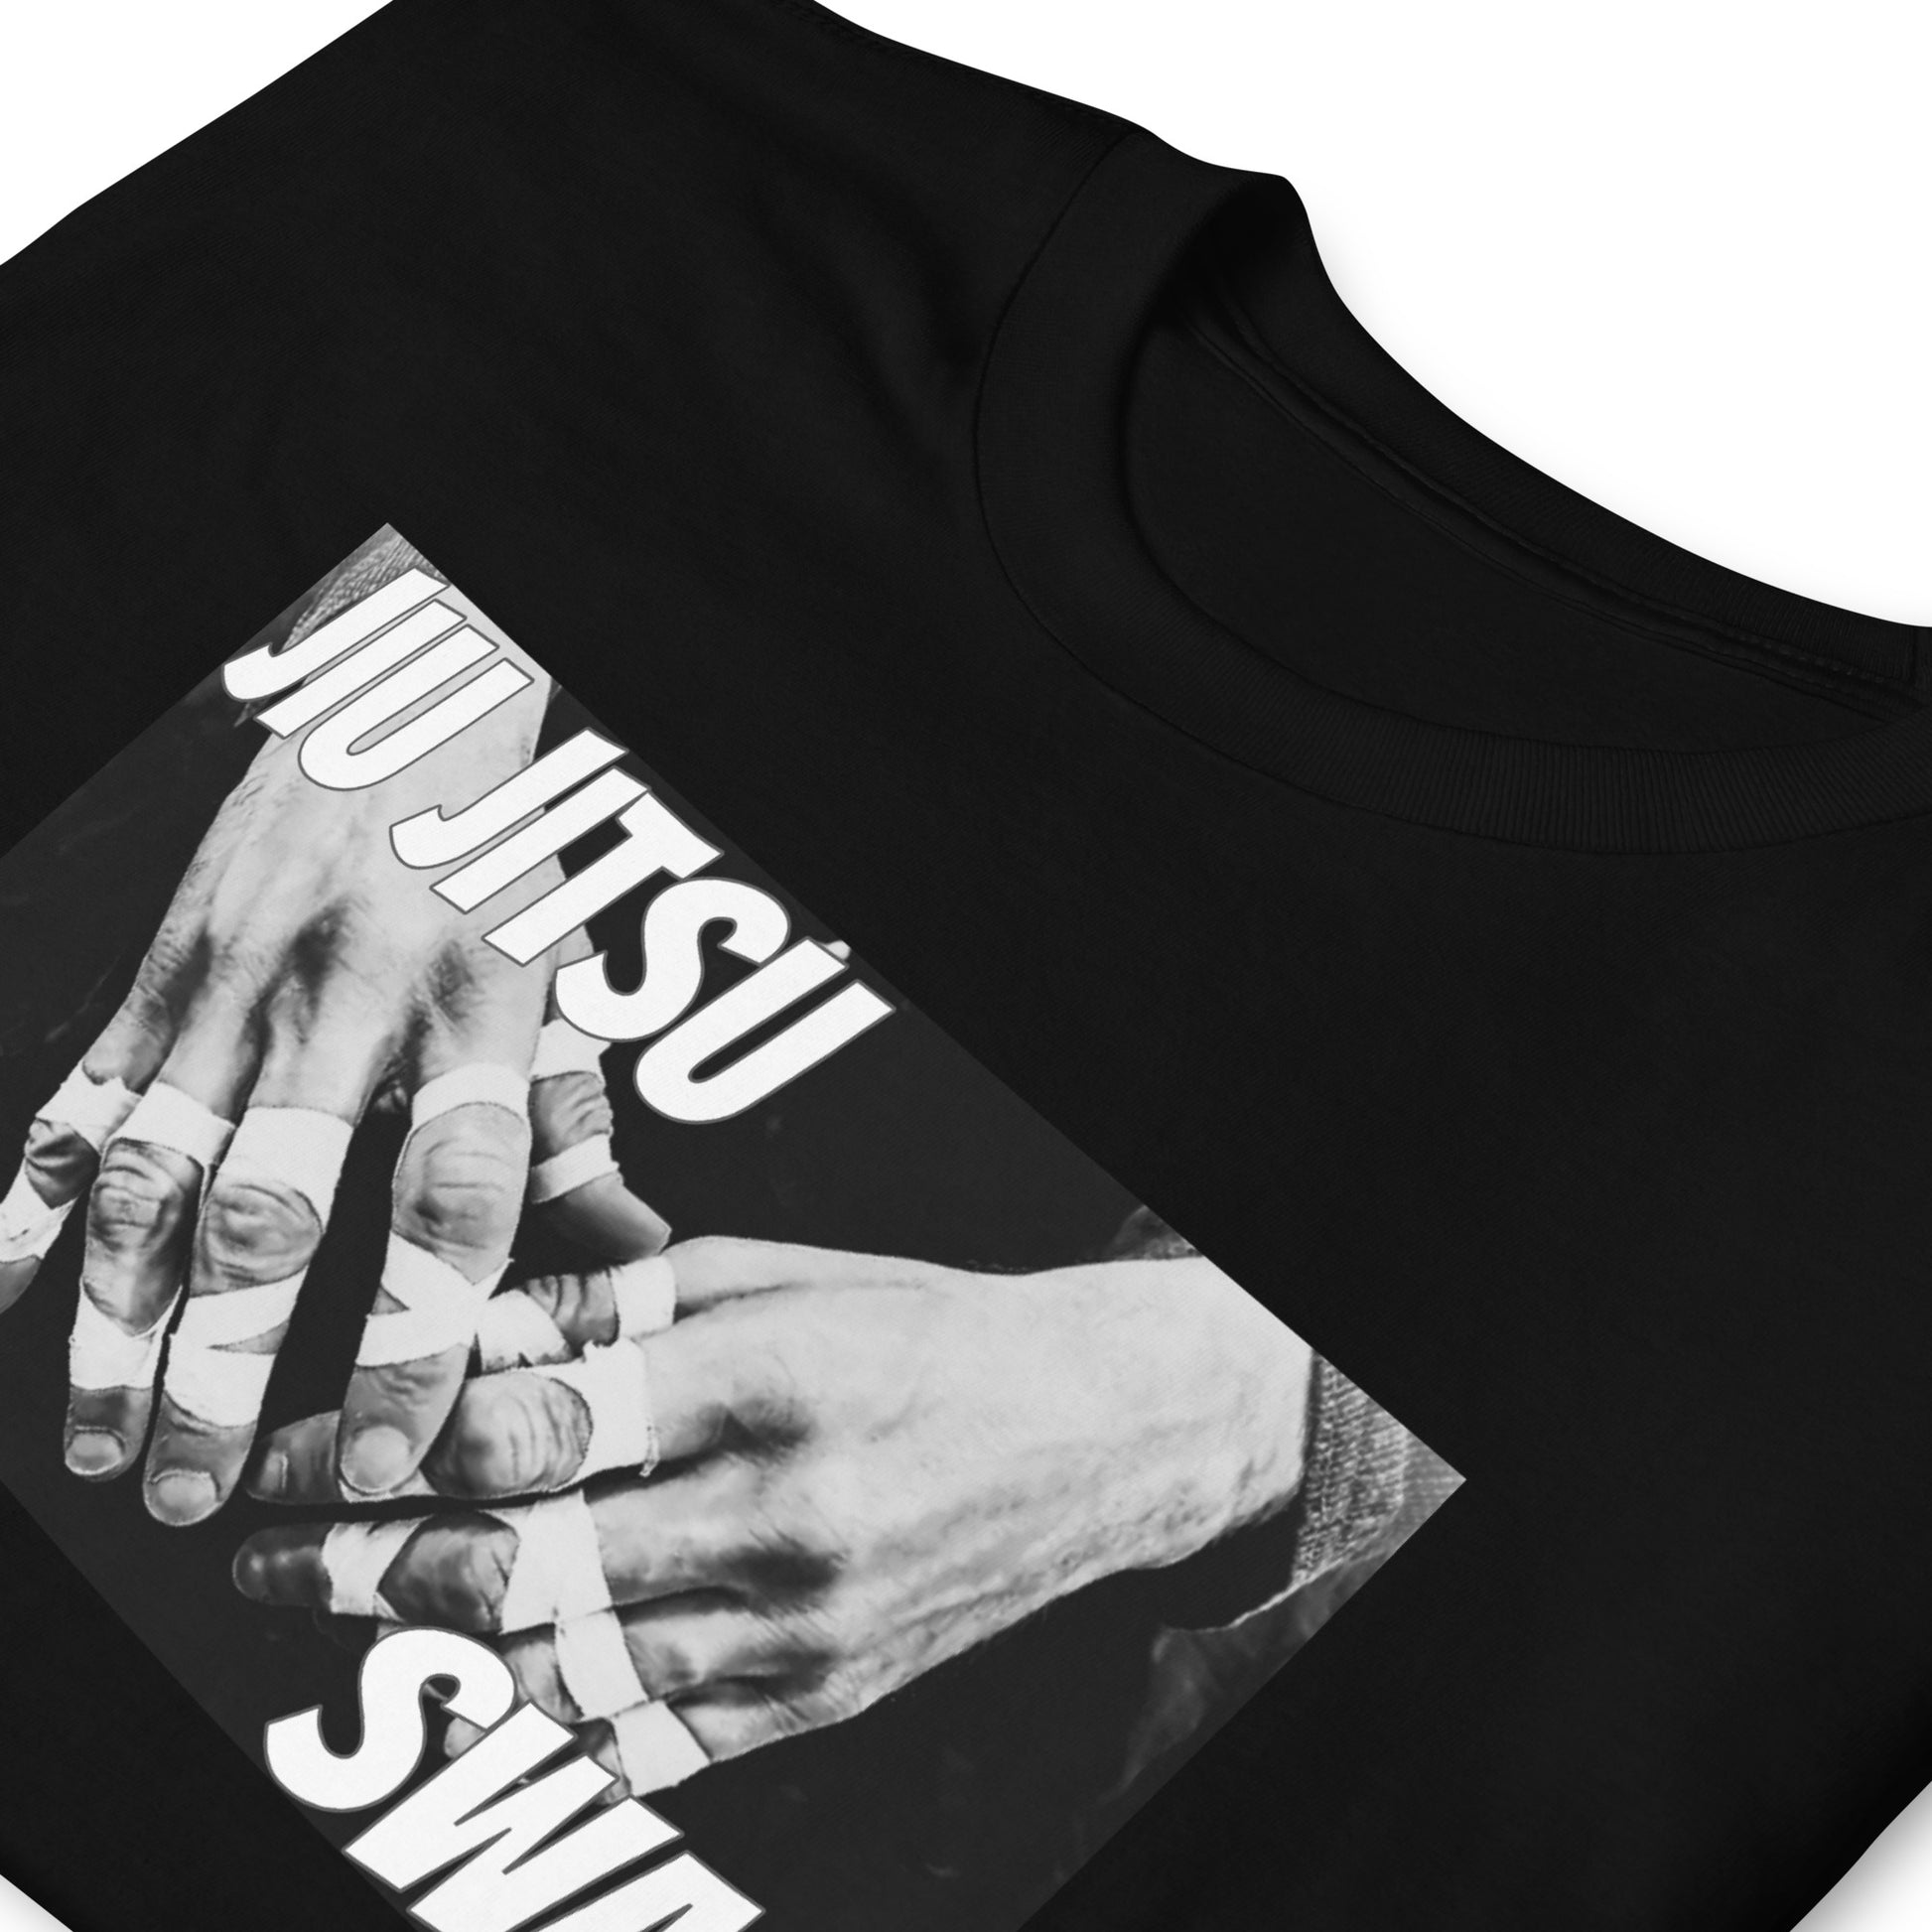 Wrapped Fingers Jiu Jitsu Swag Shirt - BJJ Swag